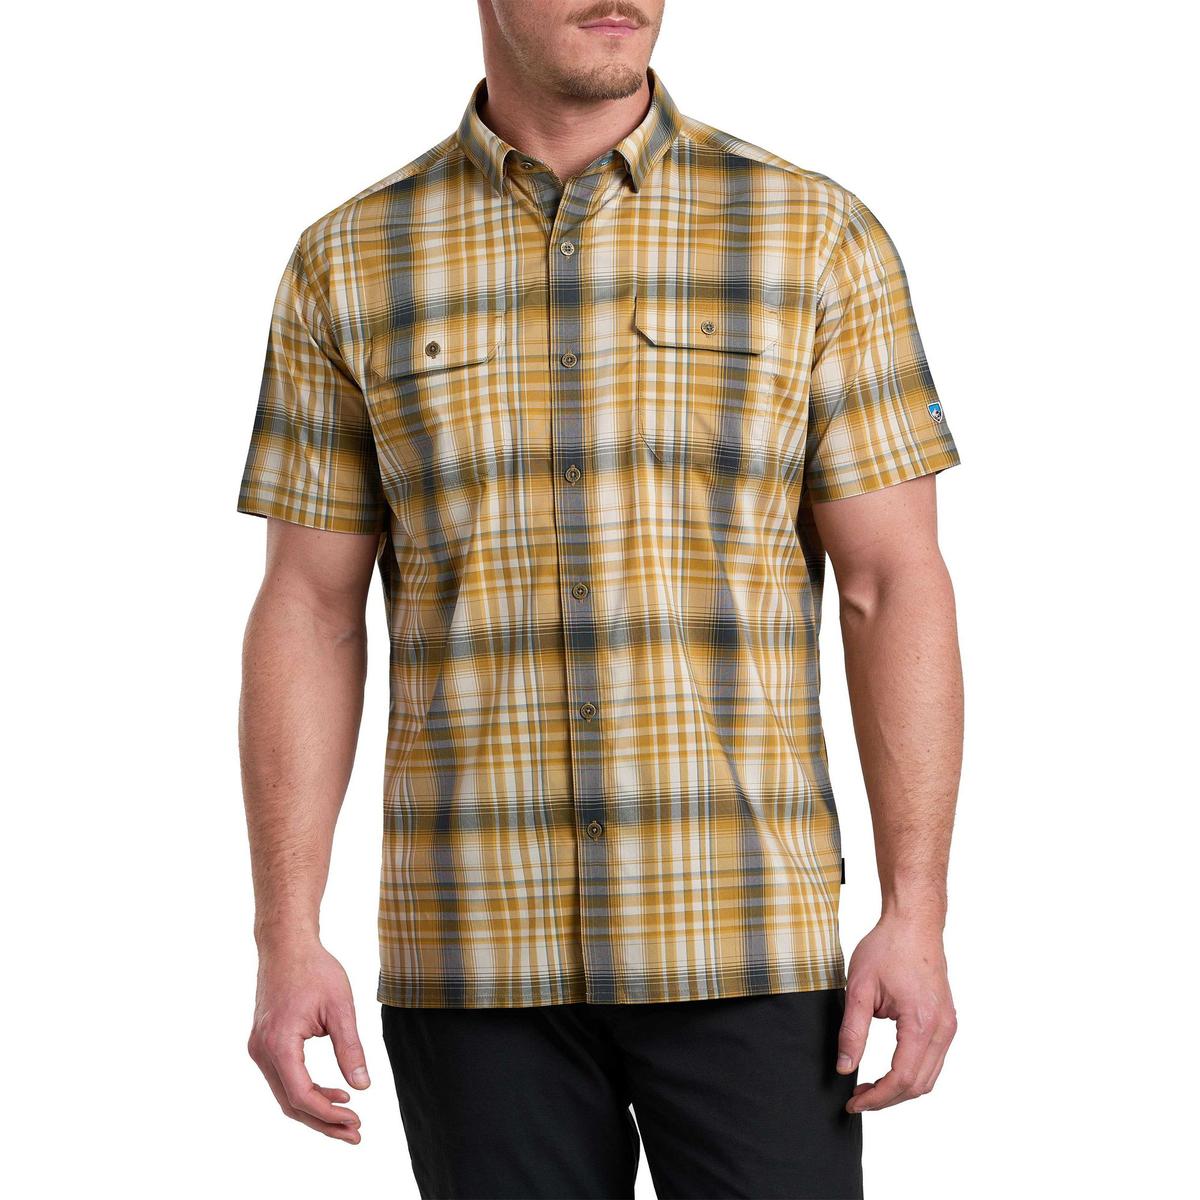 KUHL Response Long-Sleeve Shirt - Men's - Clothing